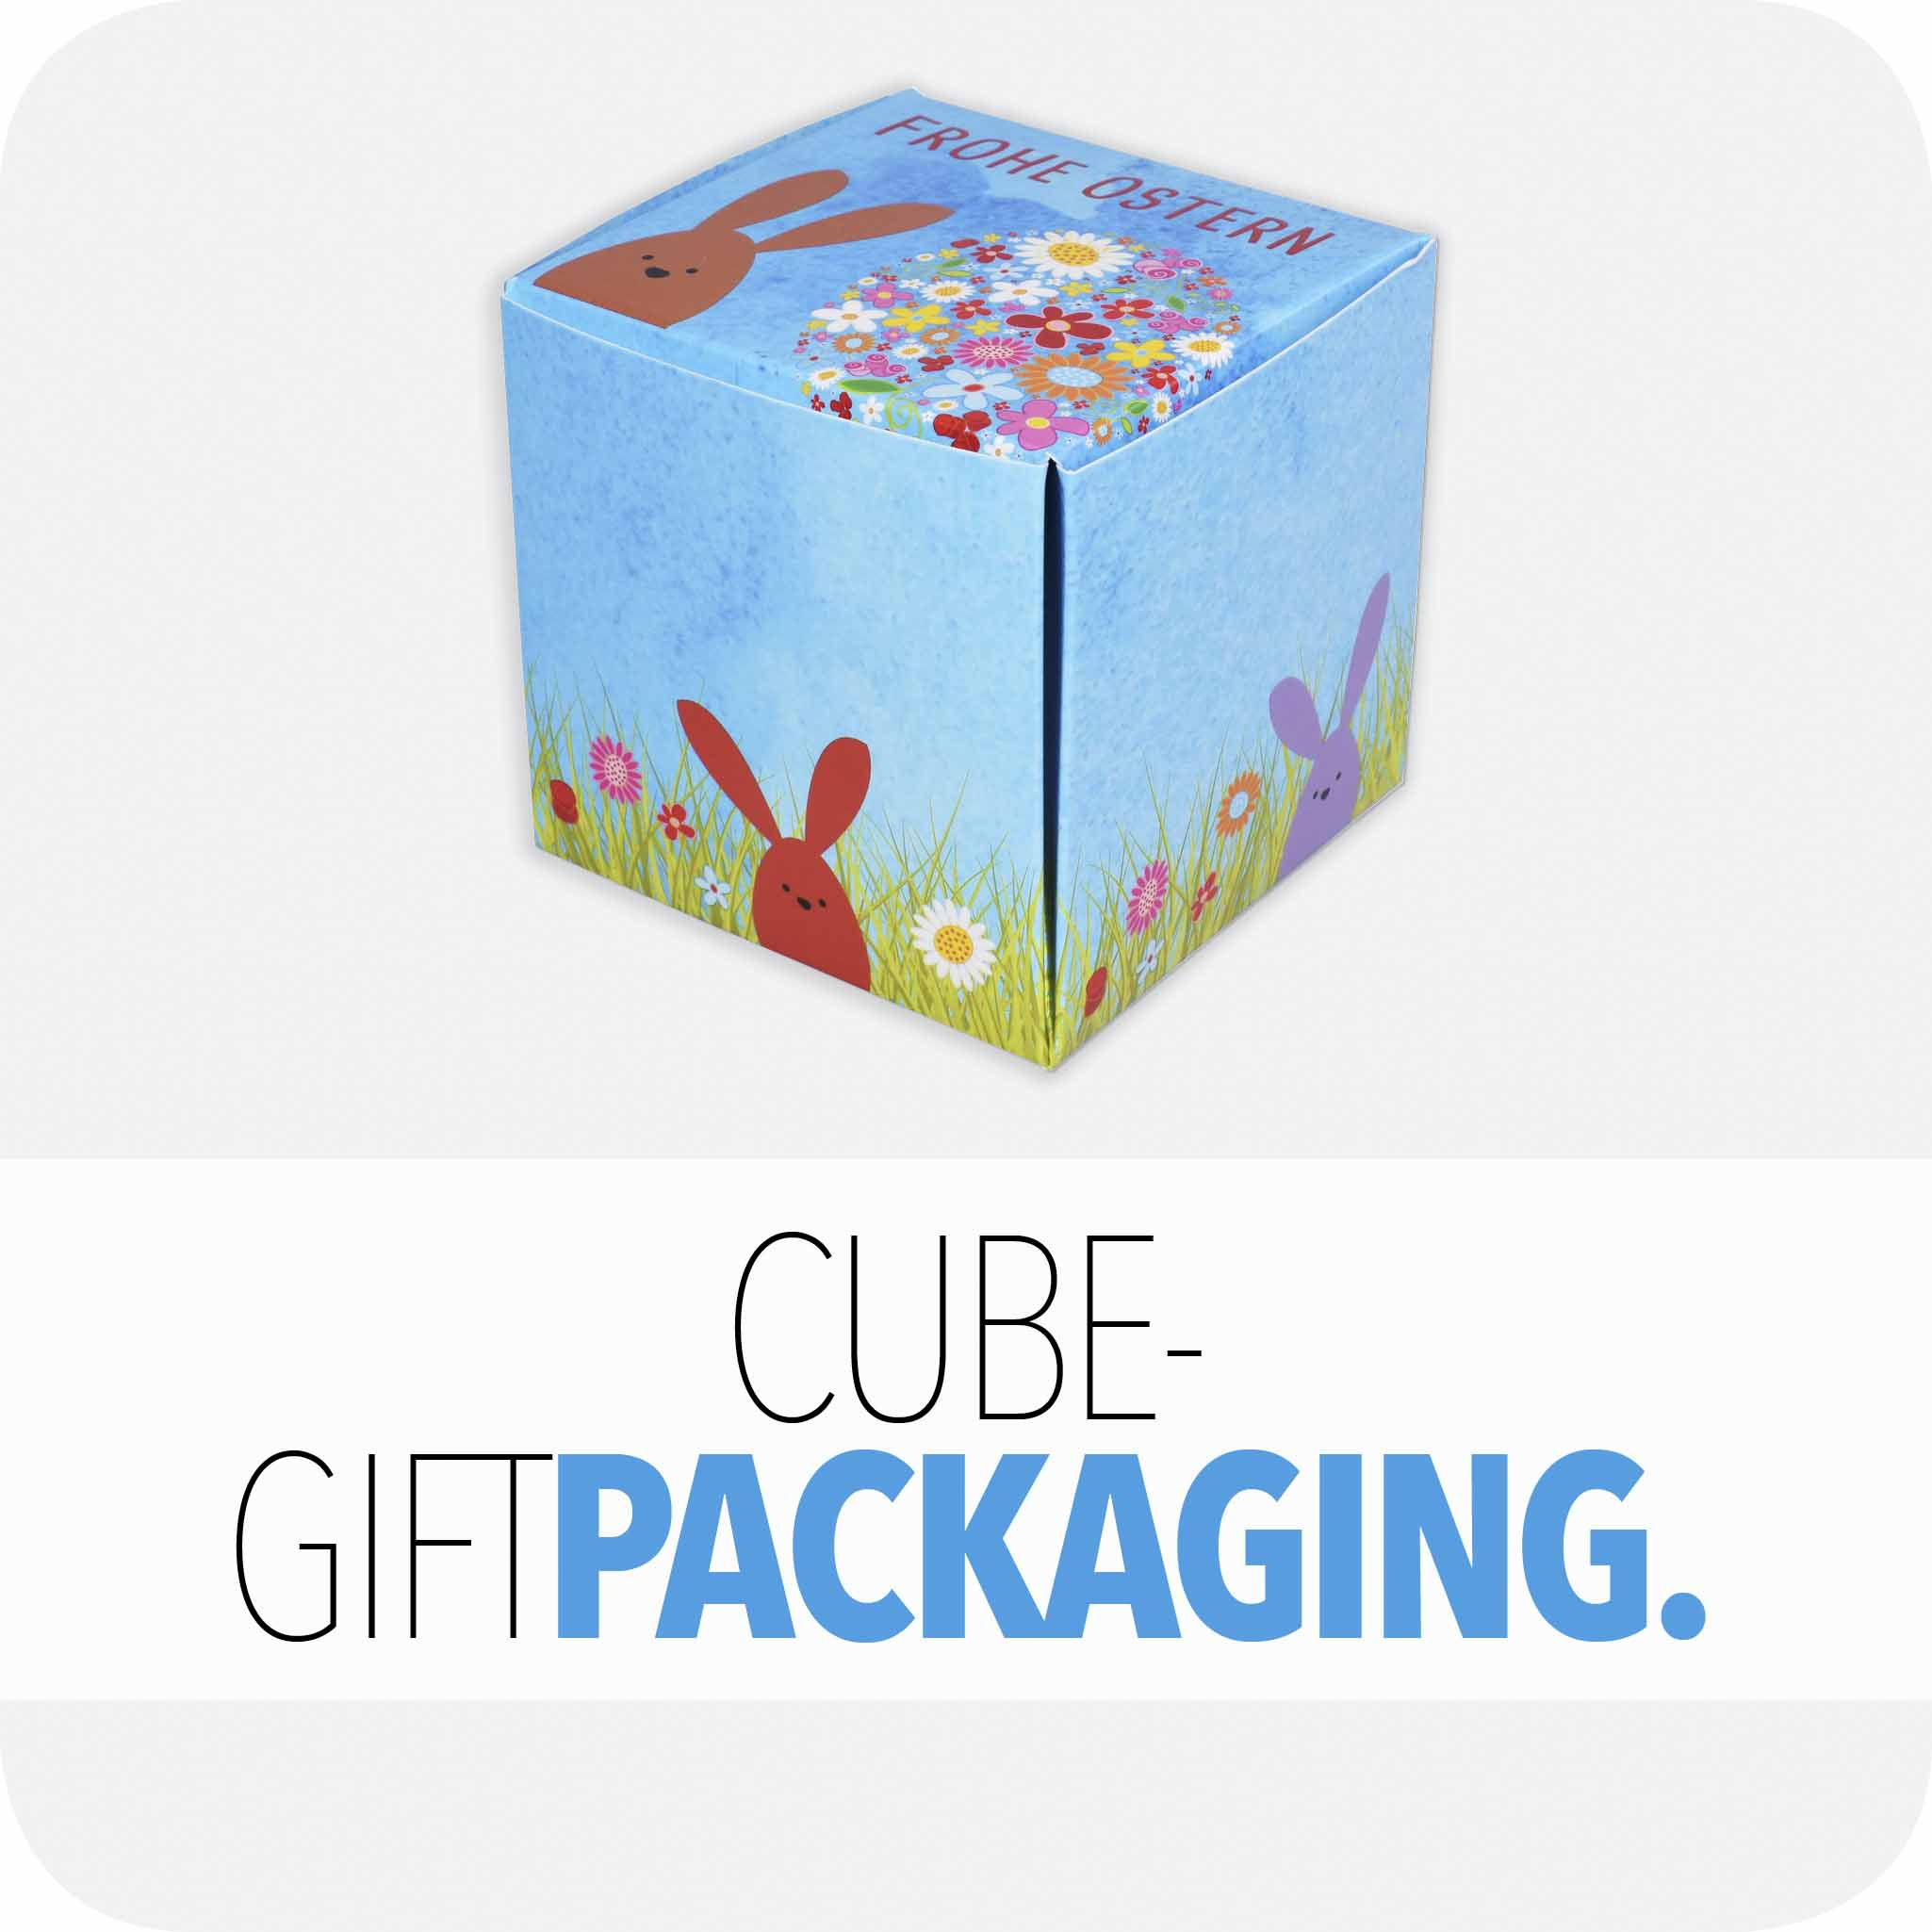 Cube giftpackaging